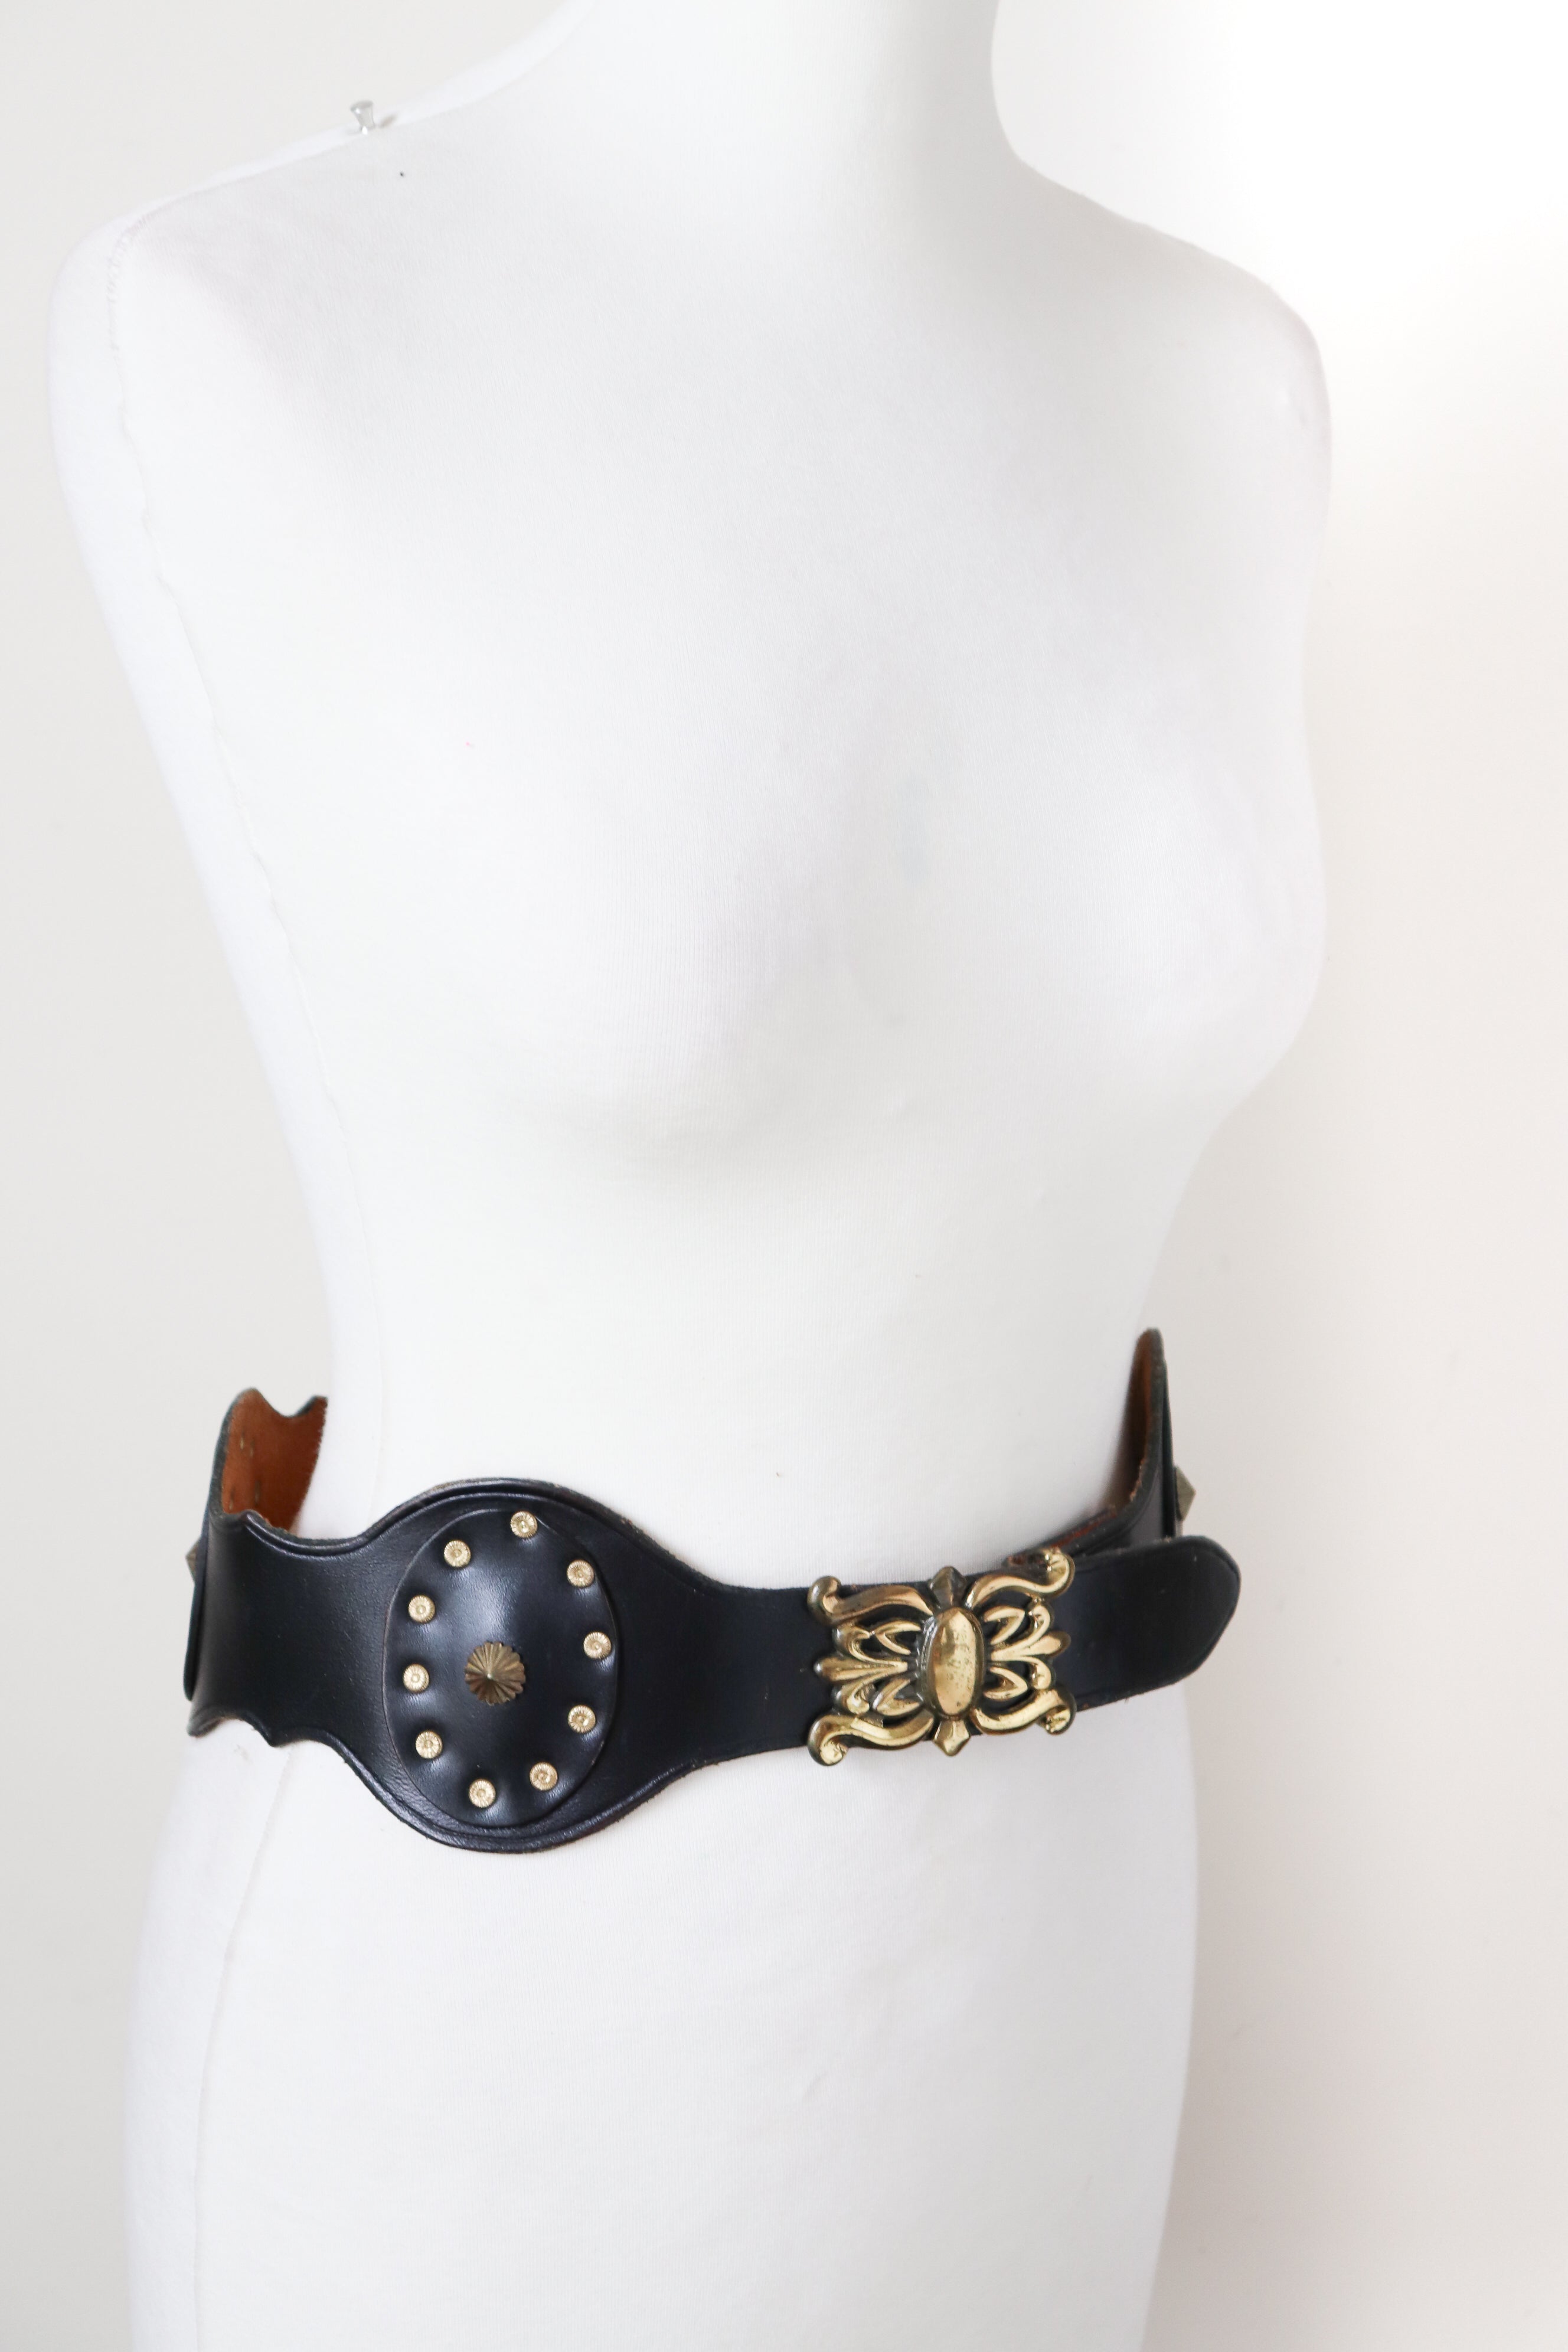 Studded Leather Corset Belt - Black - Vintage 1980s - Pitti Style - XS / Small